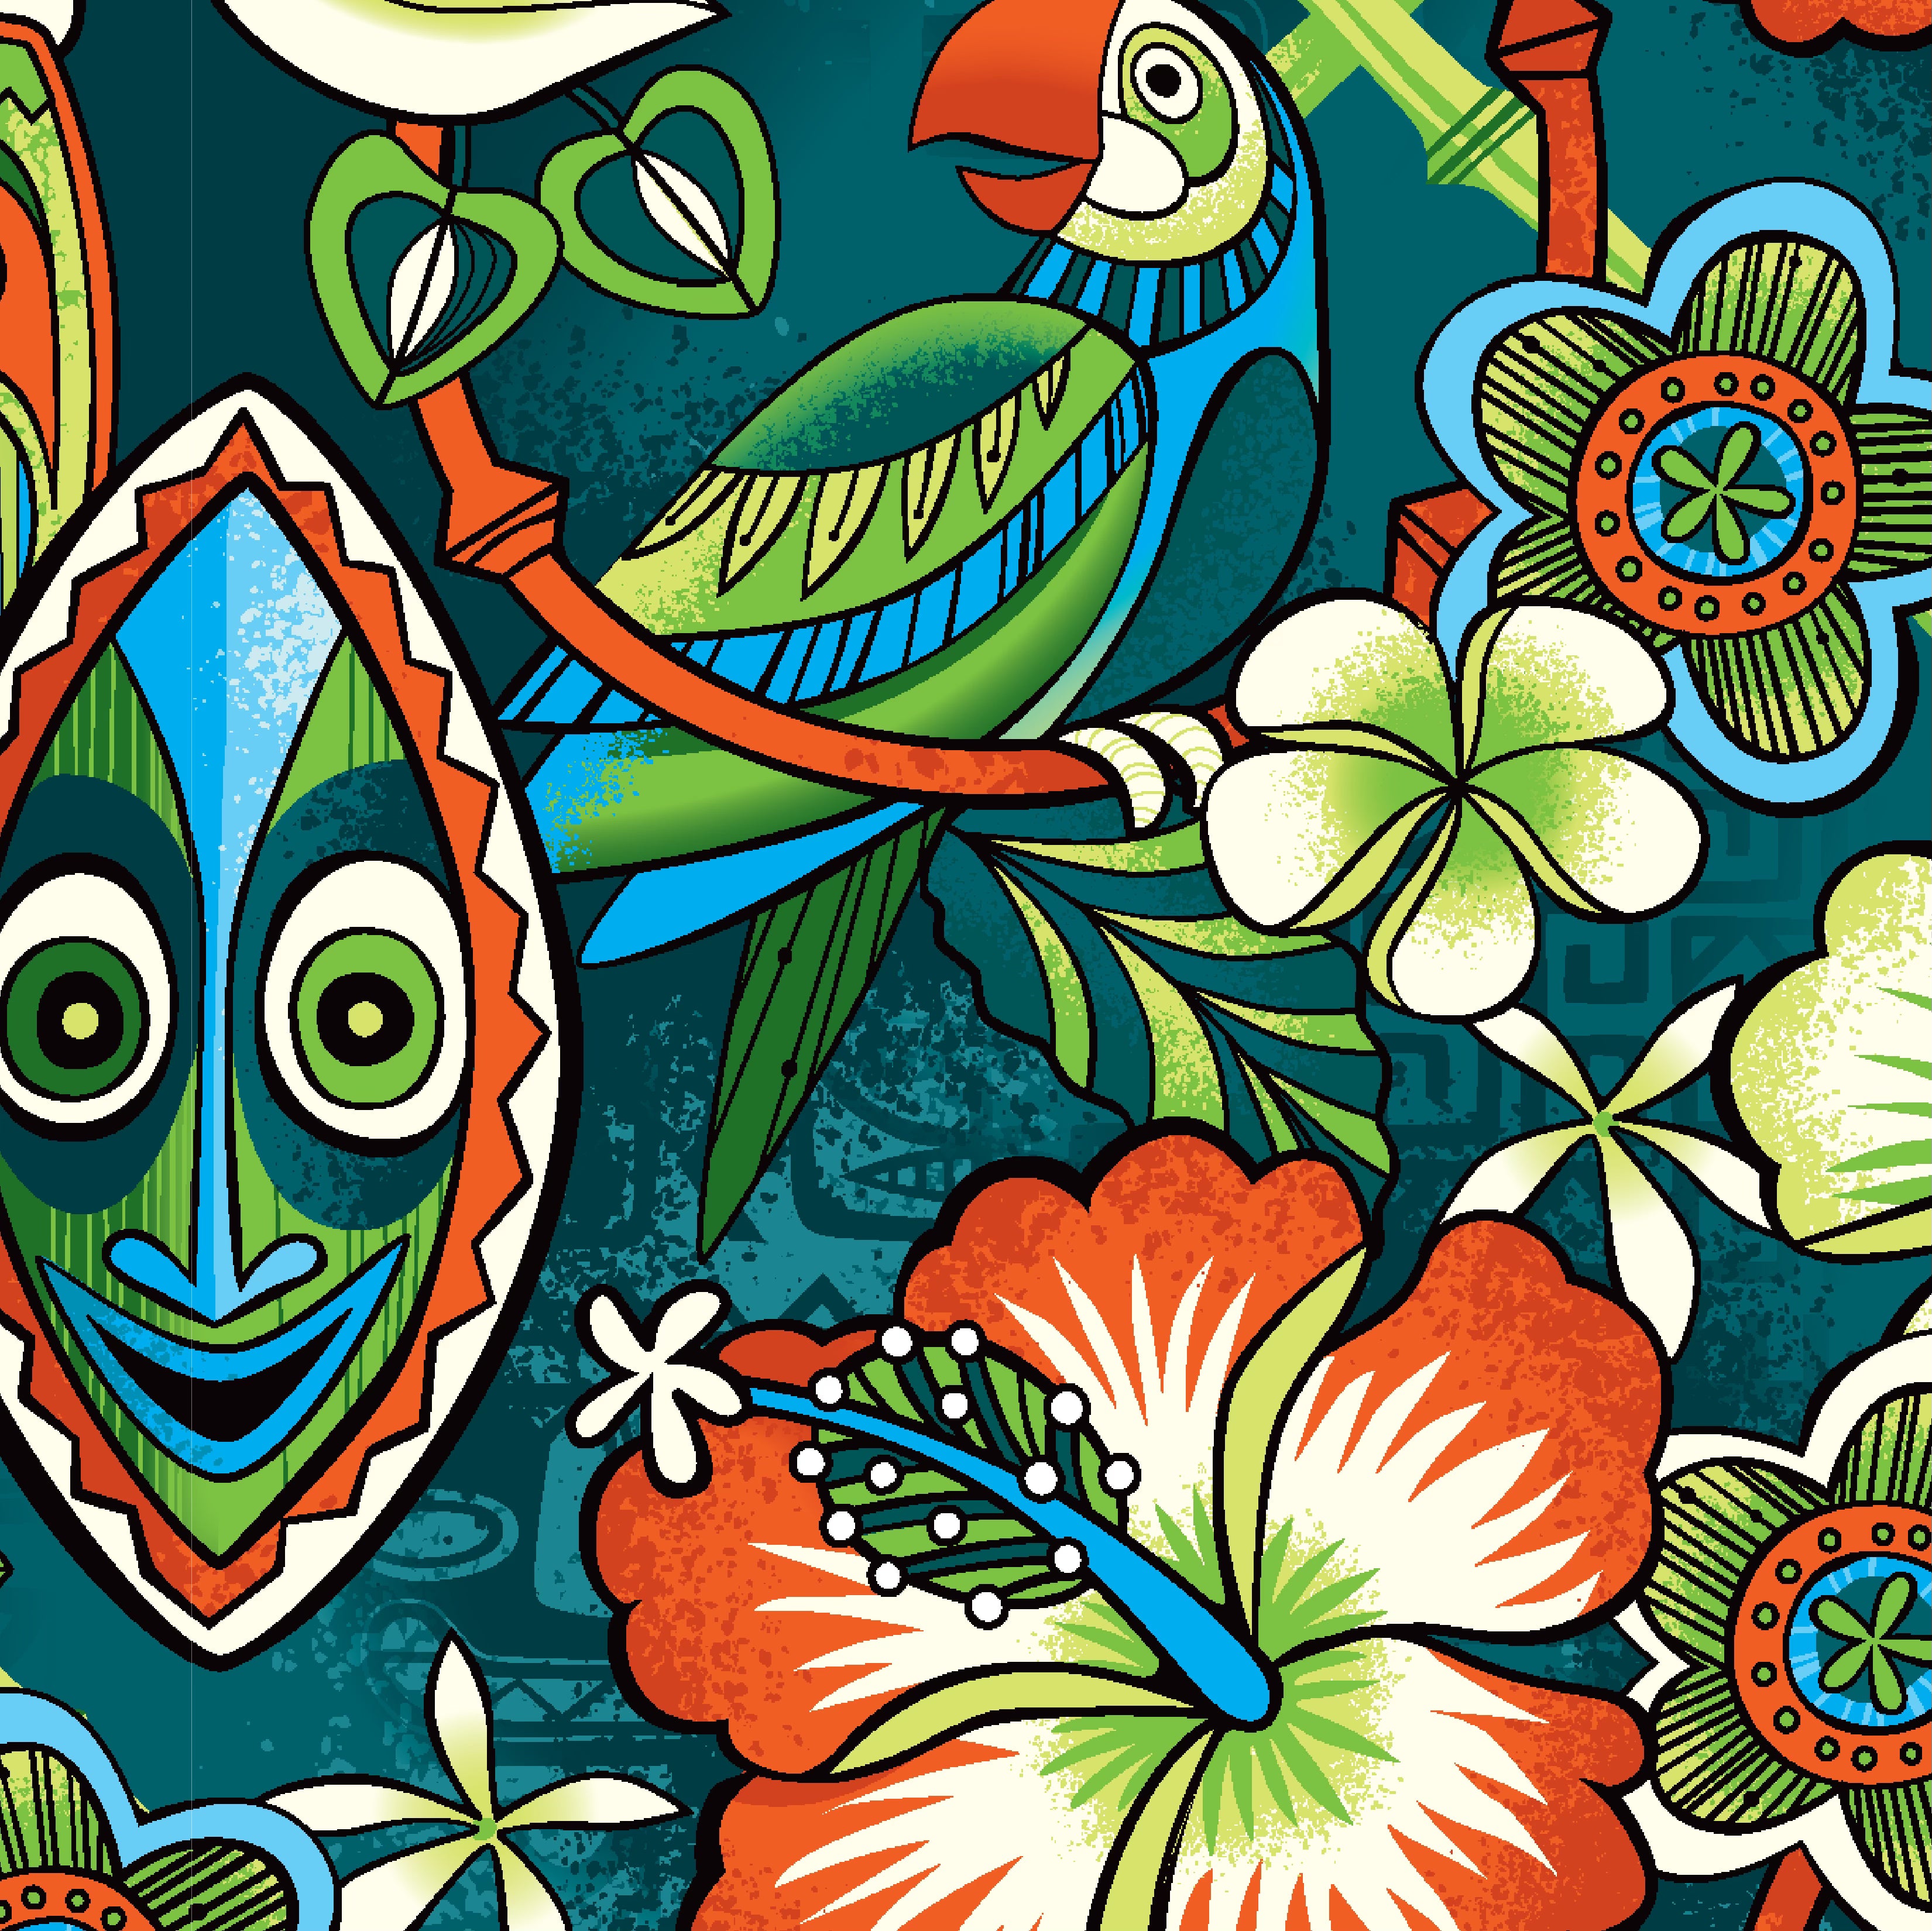 TikiLand Day 2024 'Tropic Serenade' - Classic Aloha Button-Up Shirt - Womens - Pre-Order